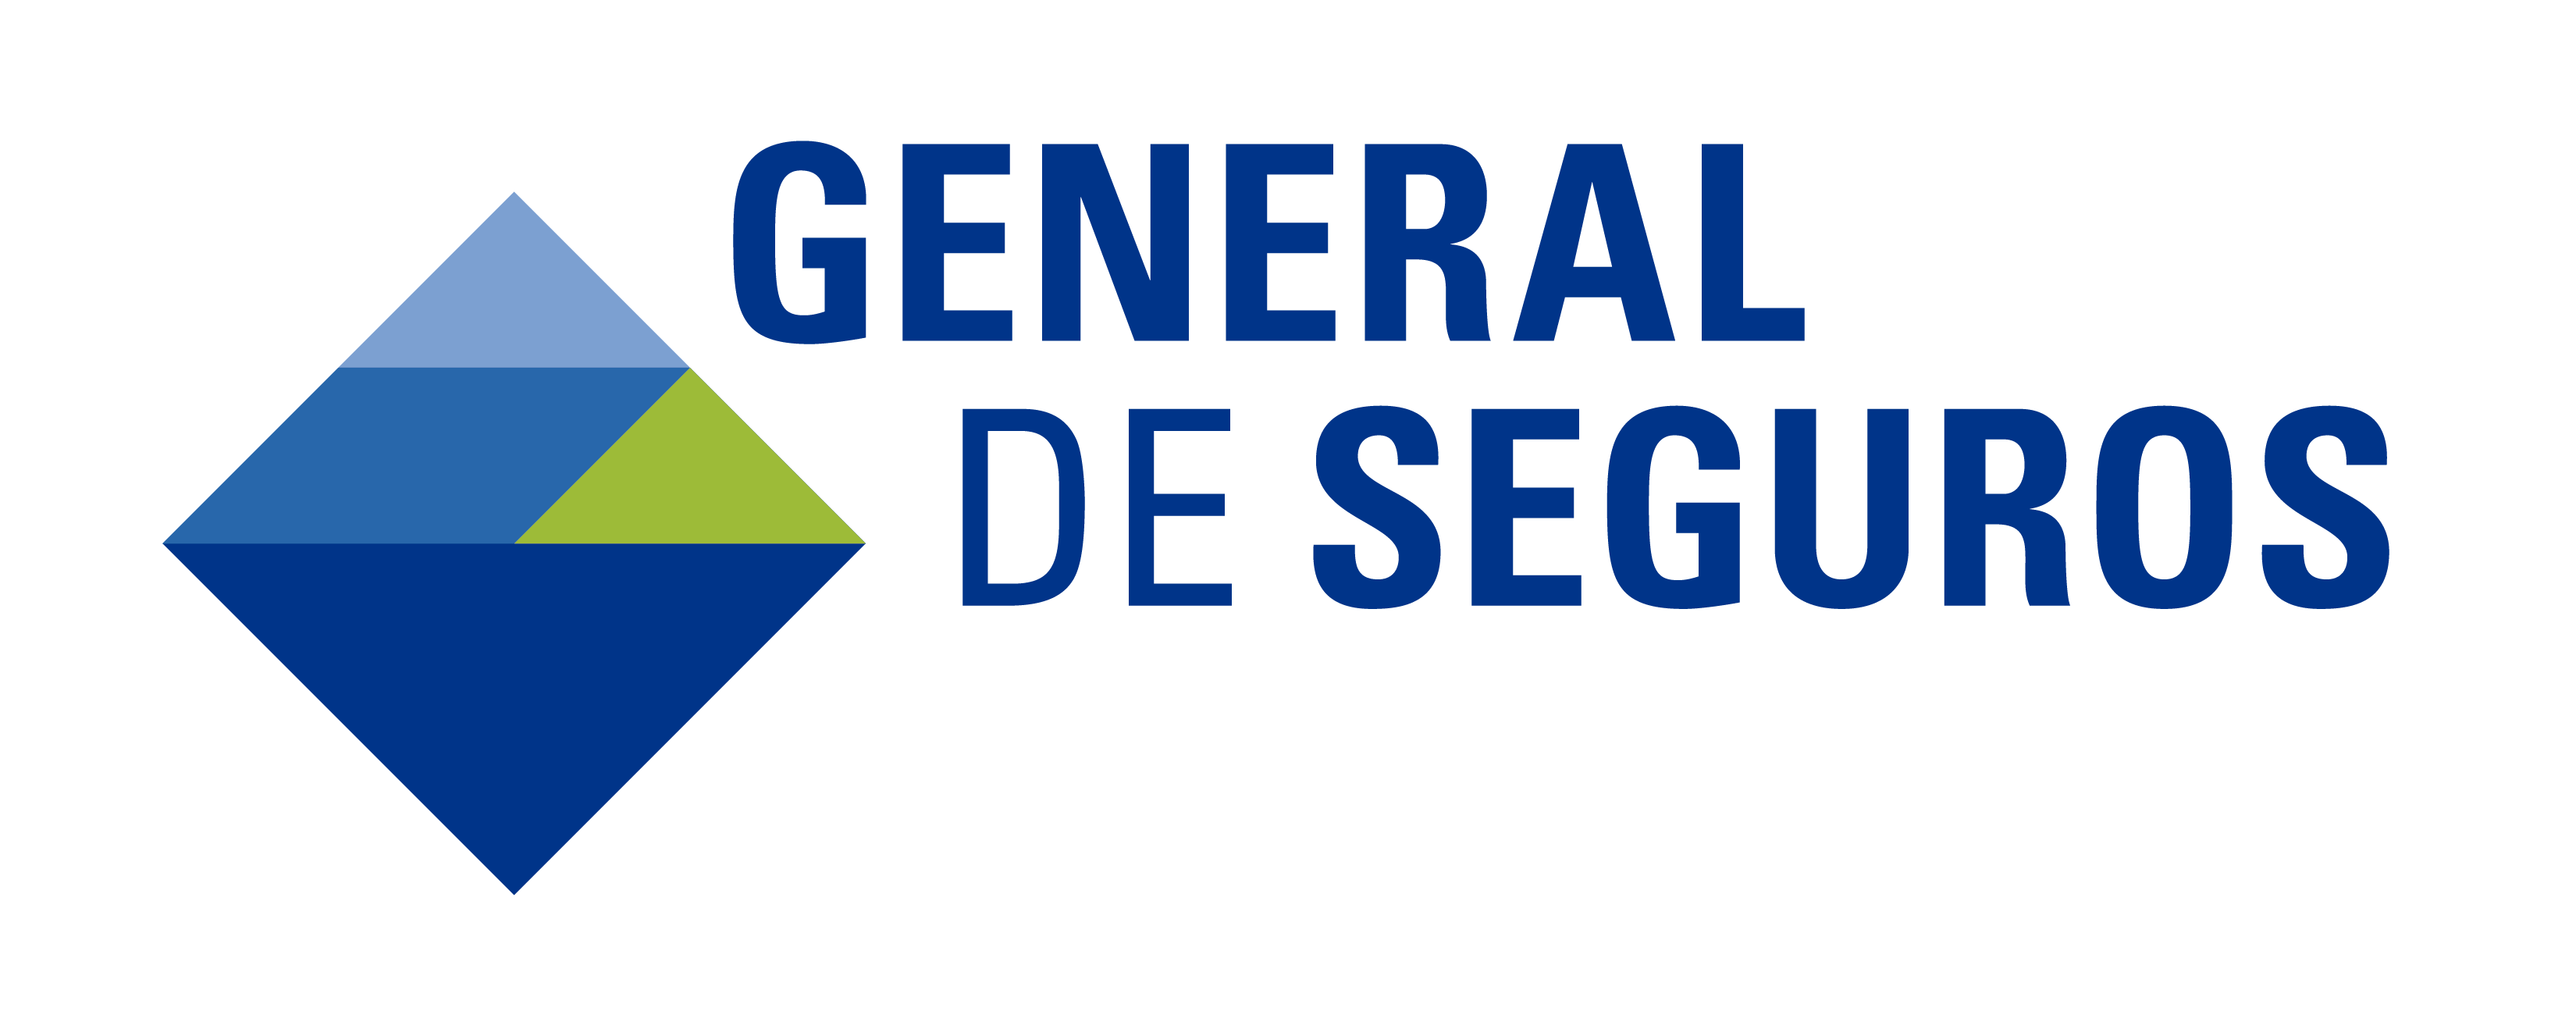 GENERAL-DE-SEGUROS-LOGO